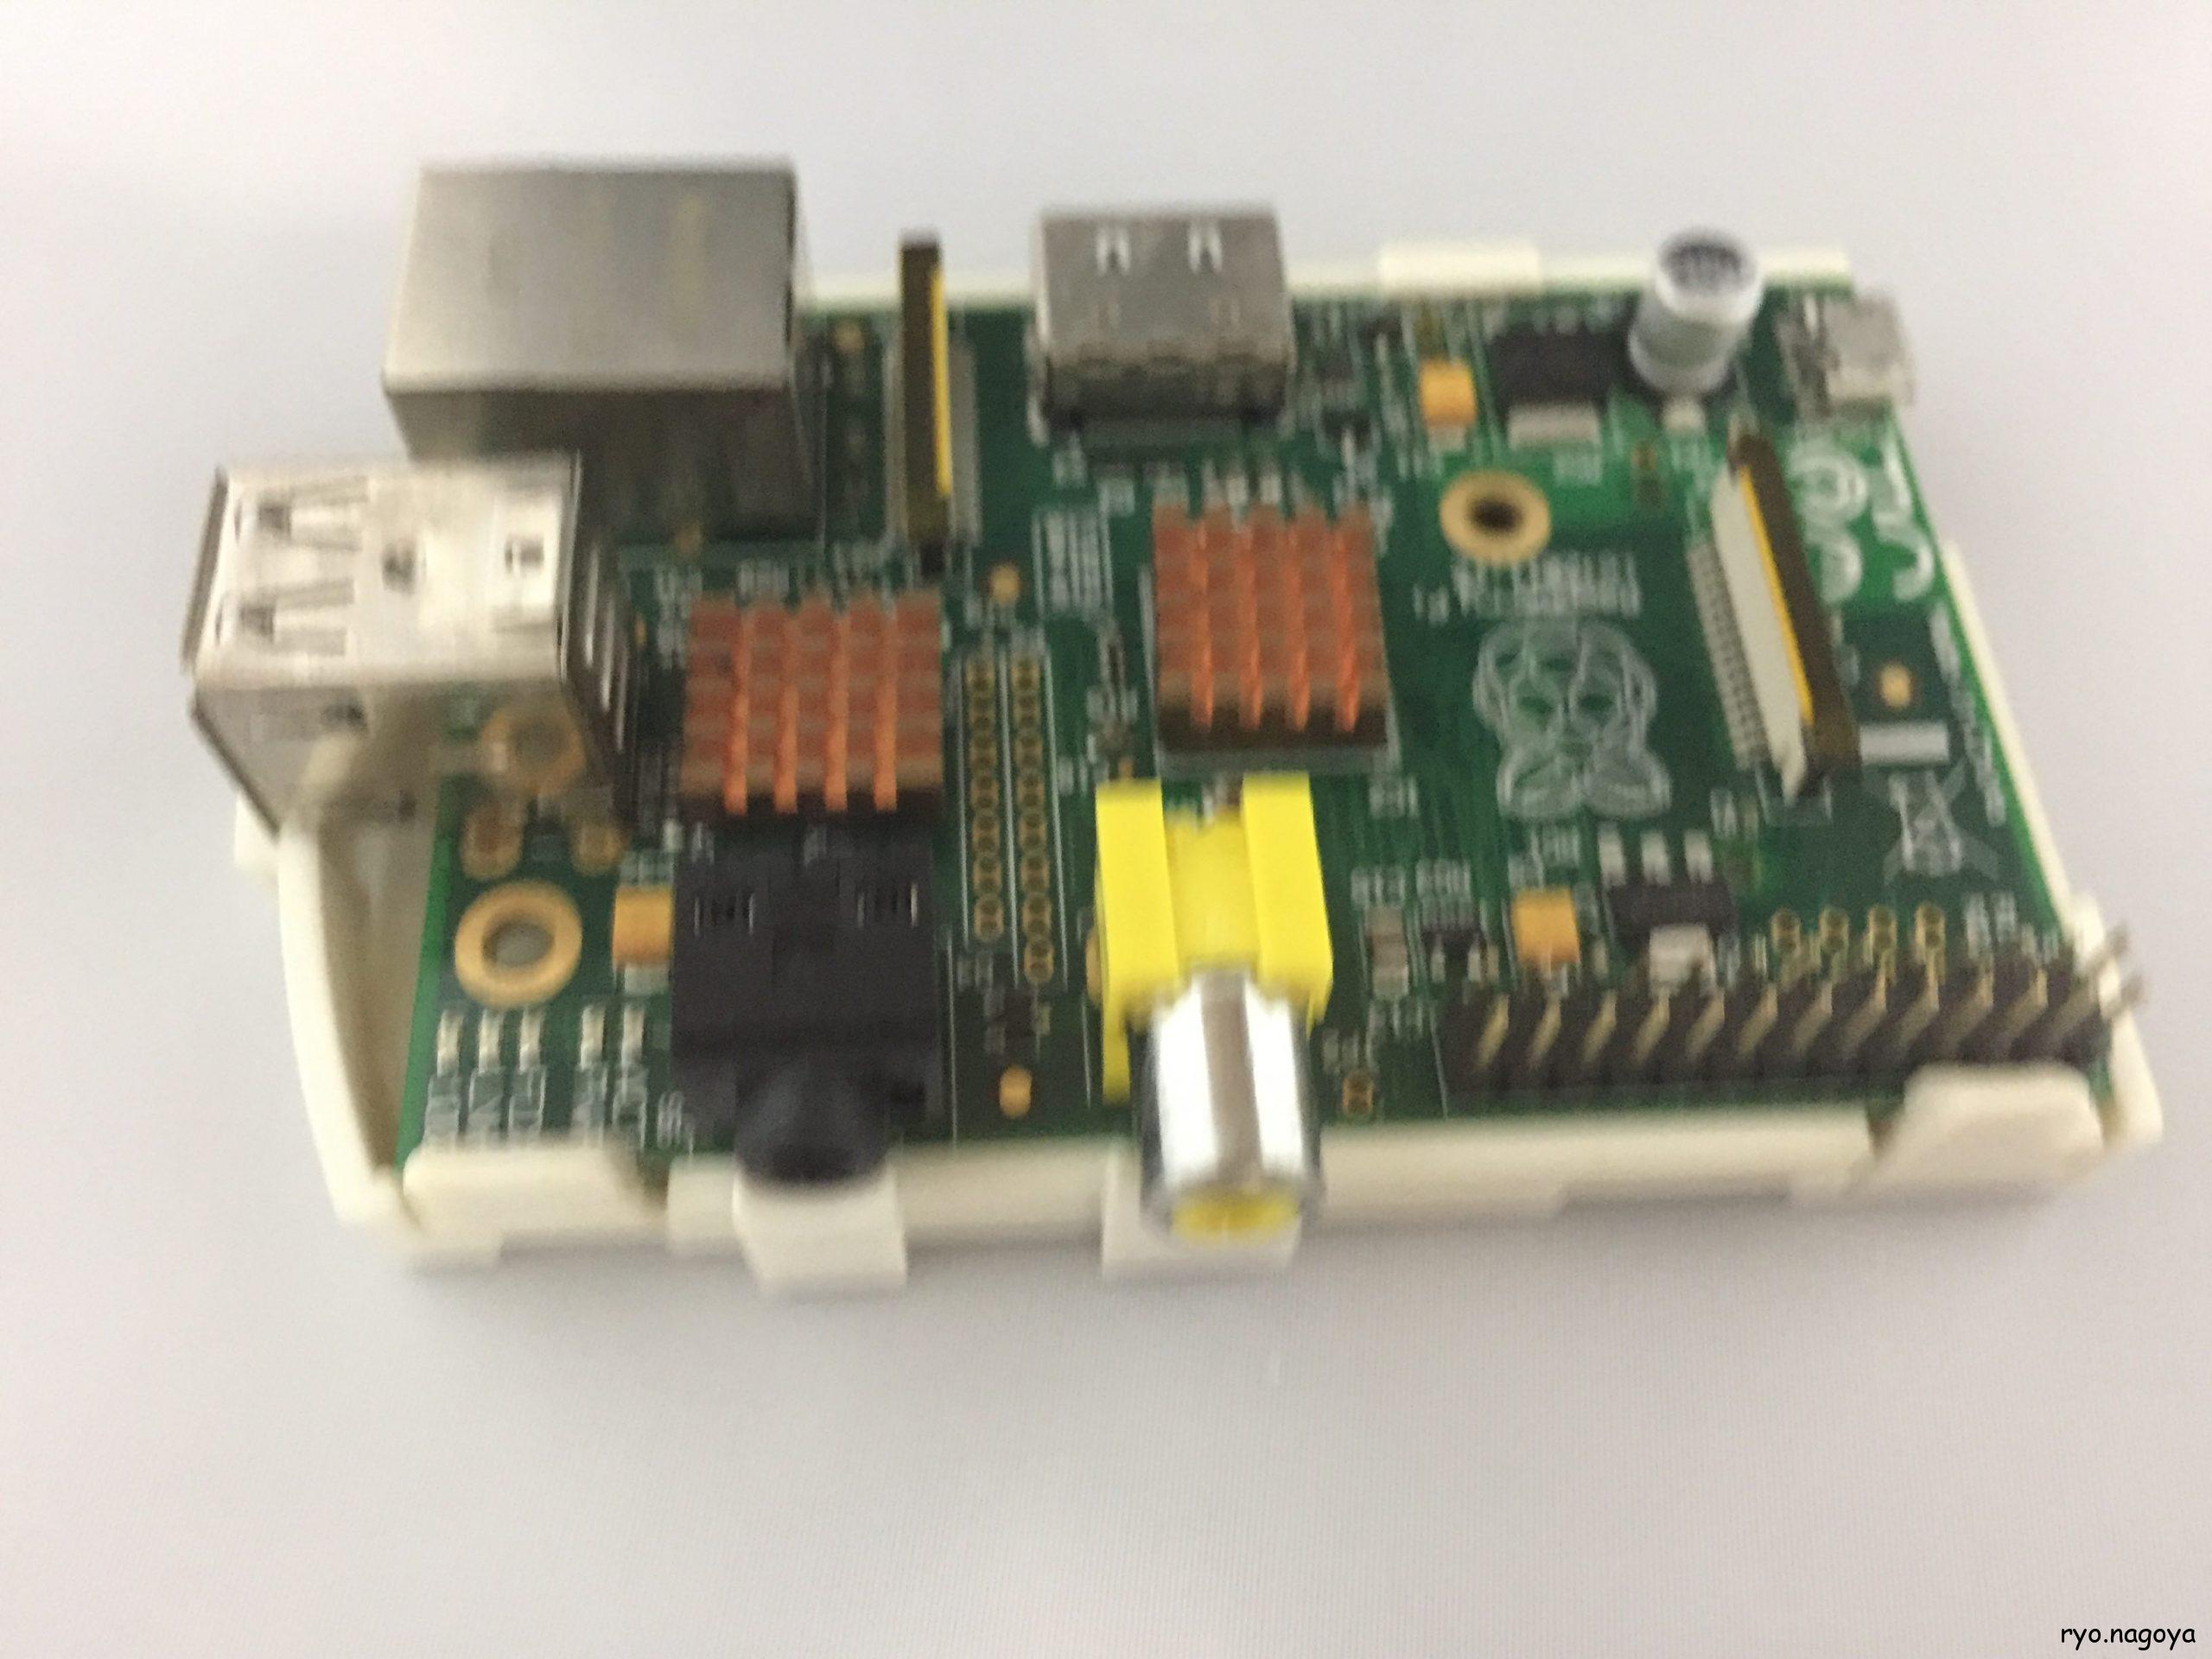 Raspberry Pi Type B 512MB